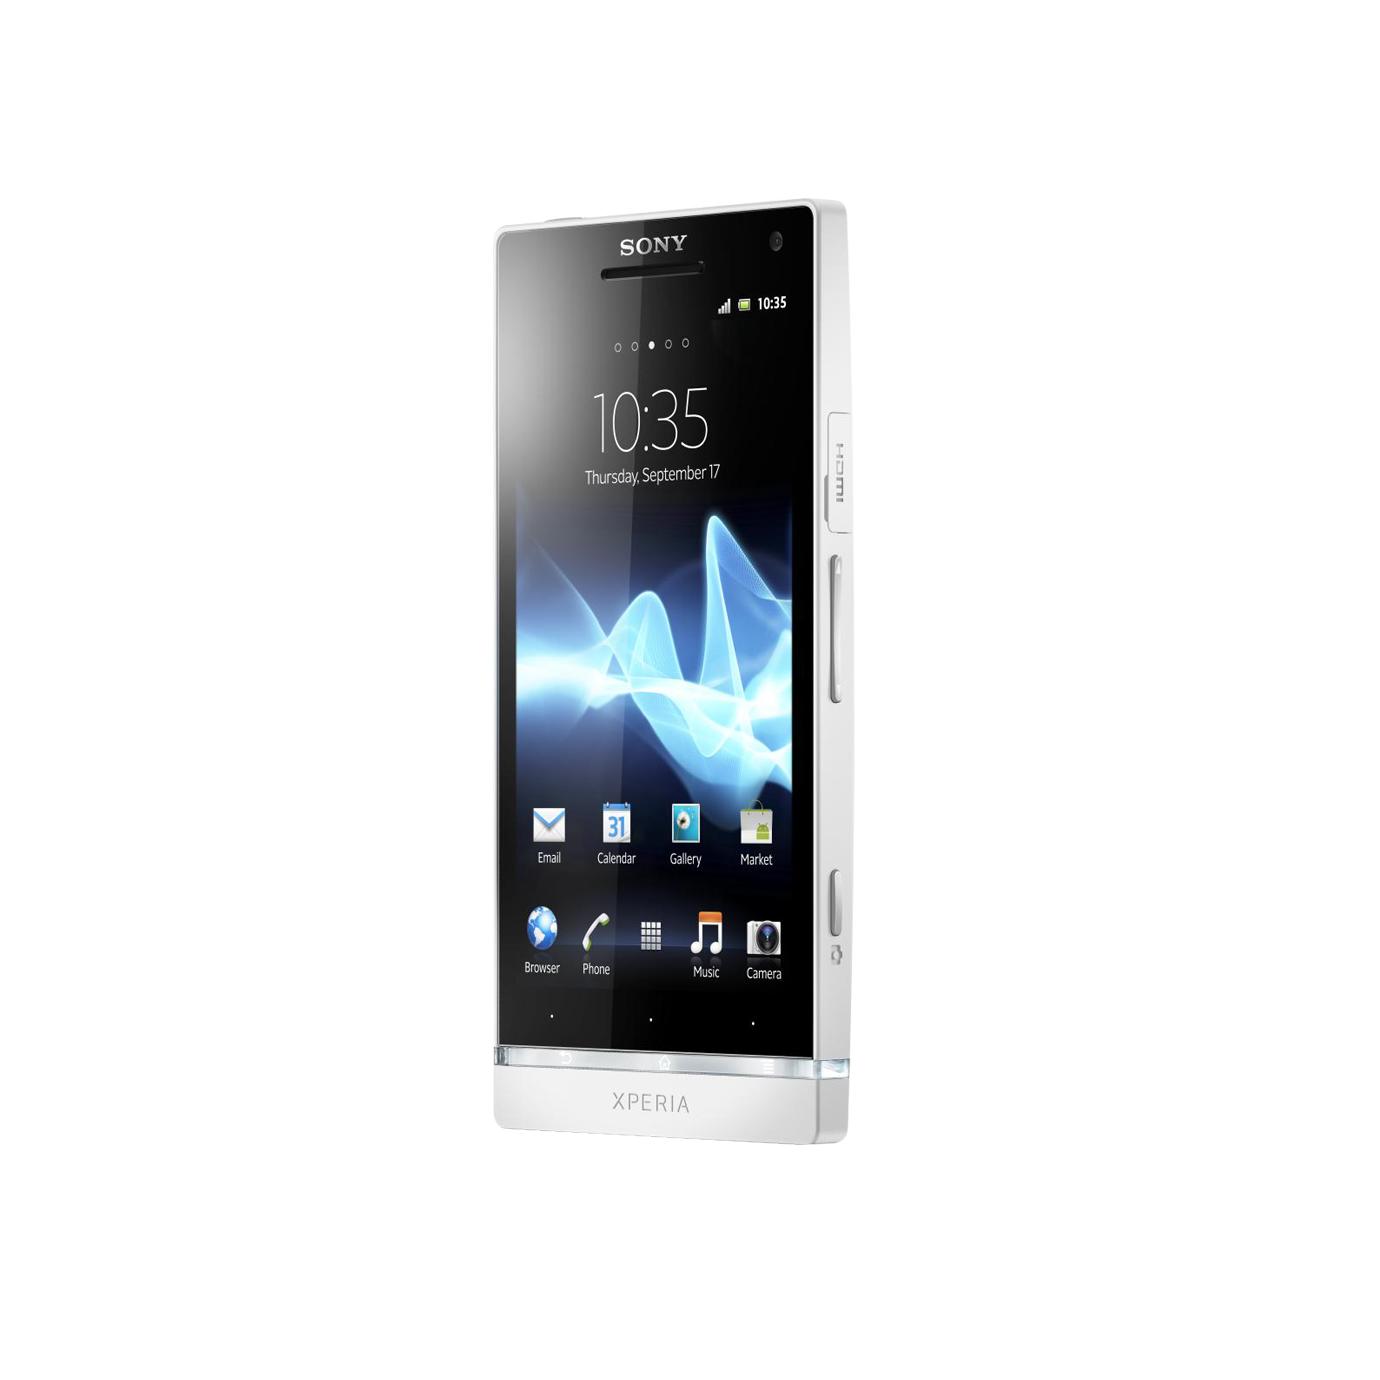 Характеристика xperia v. Sony Xperia lt26i. Sony Xperia s lt26i. Sony Xperia s lt26i White. Sony Xperia s белый.